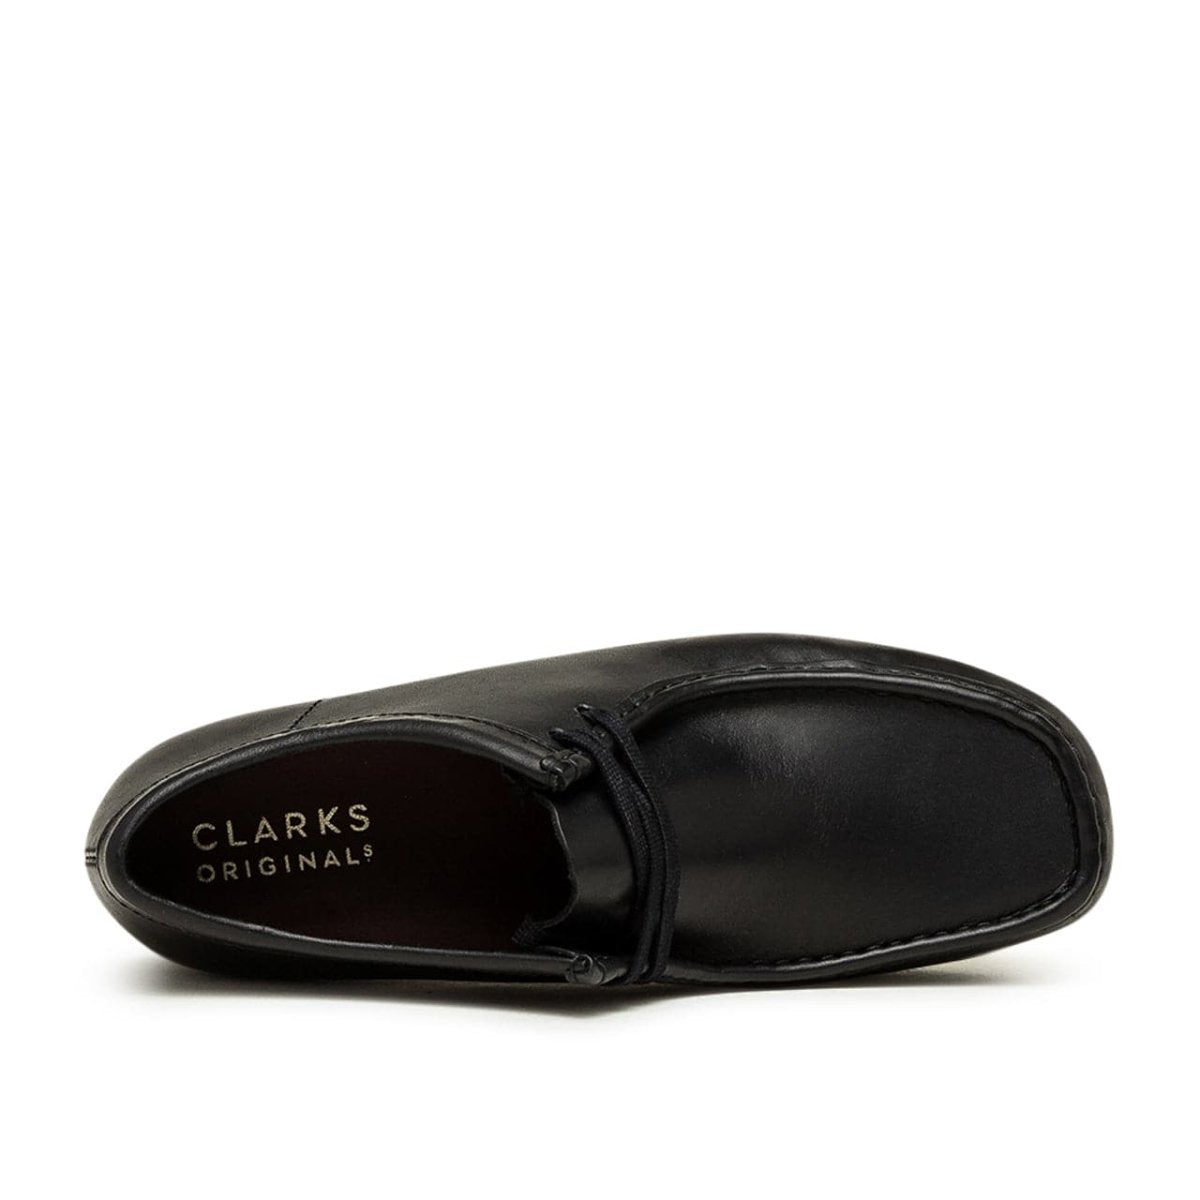 Clarks Originals Wallabee Boot Black Leather (Schwarz)  - Allike Store